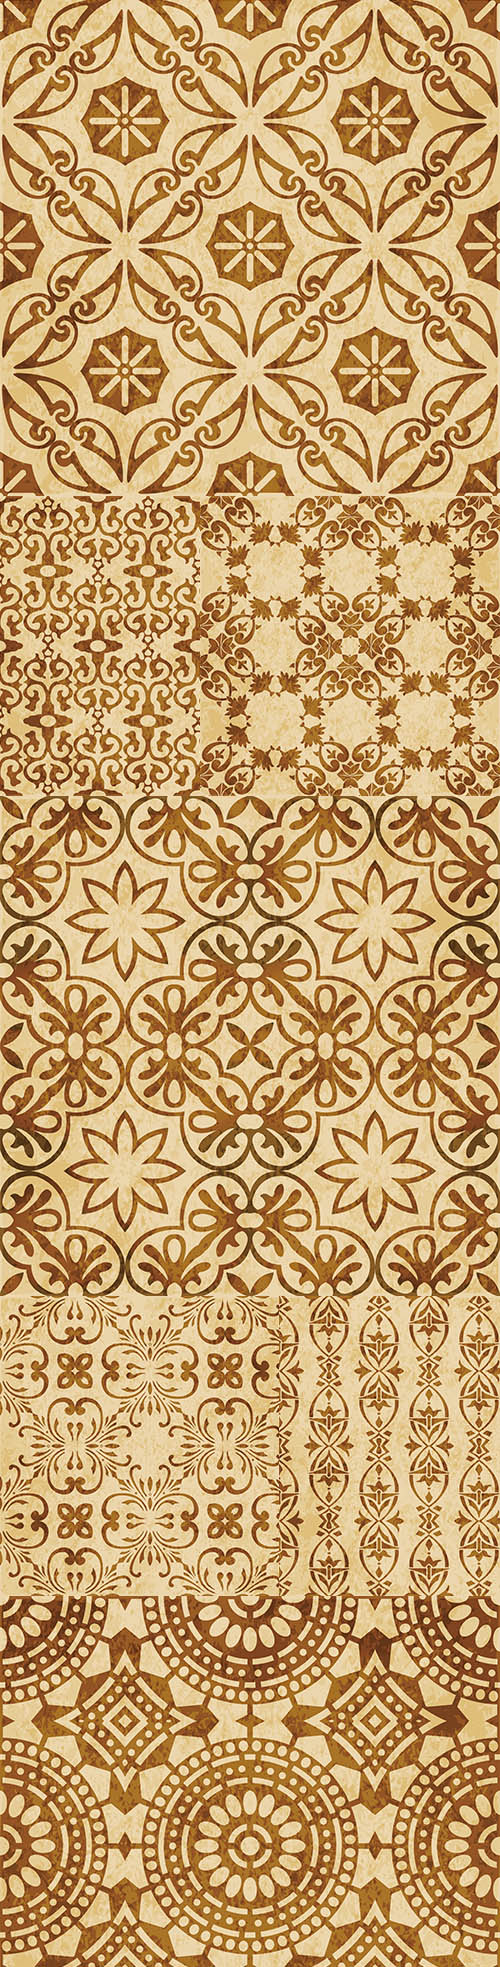 Retro brown textured background decorative elements
